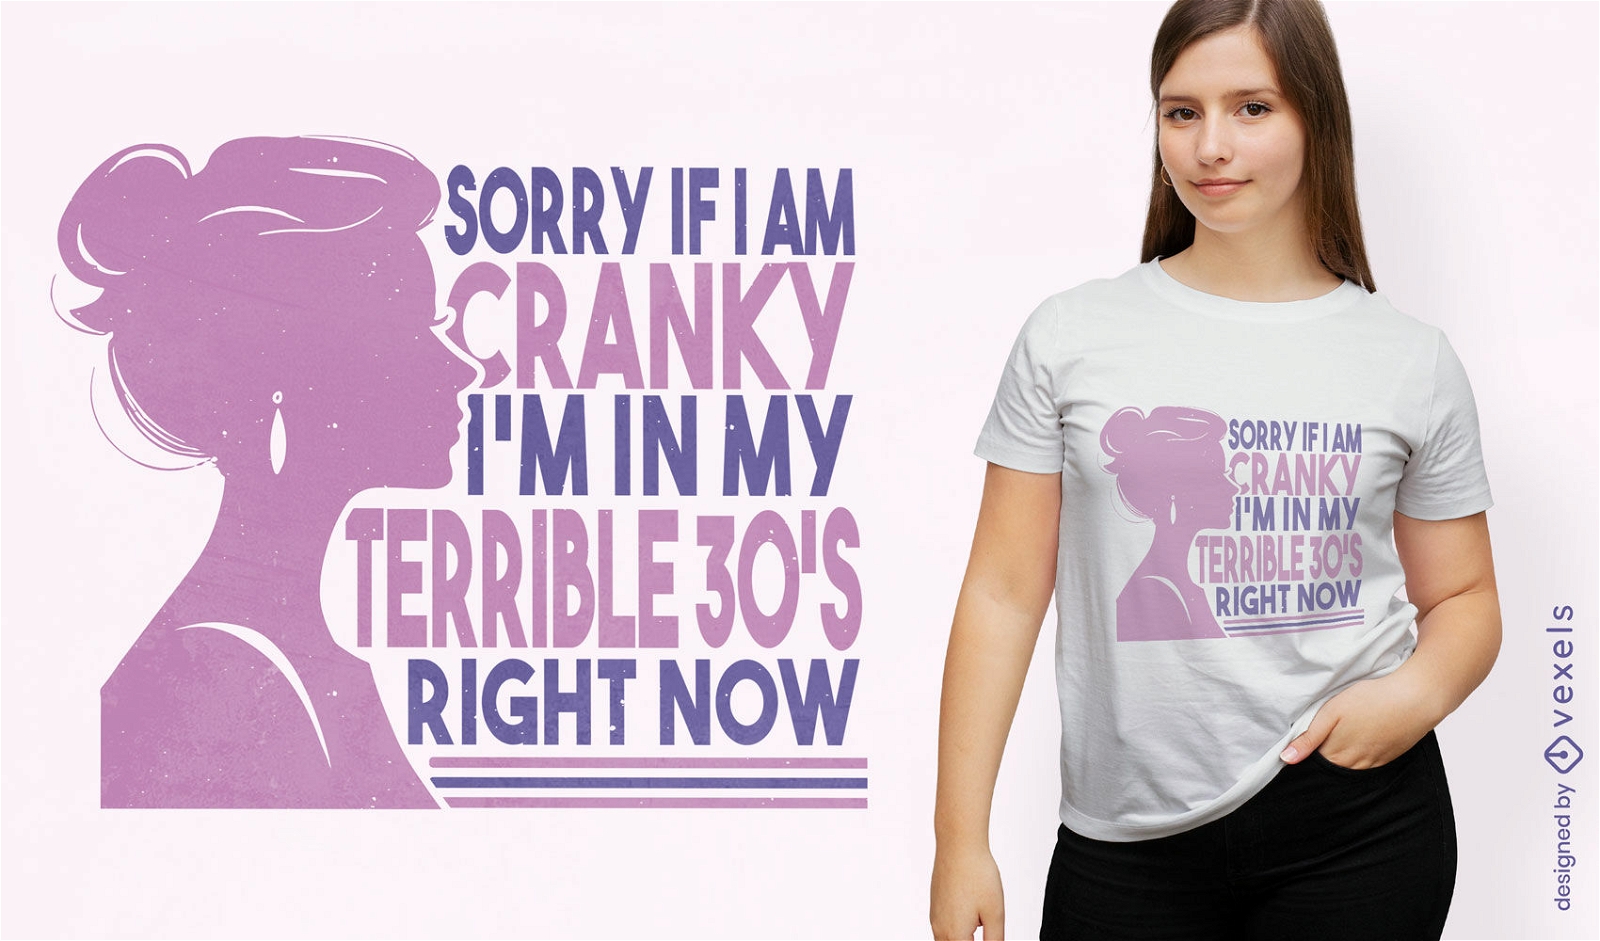 Terrible 30s quote t-shirt design